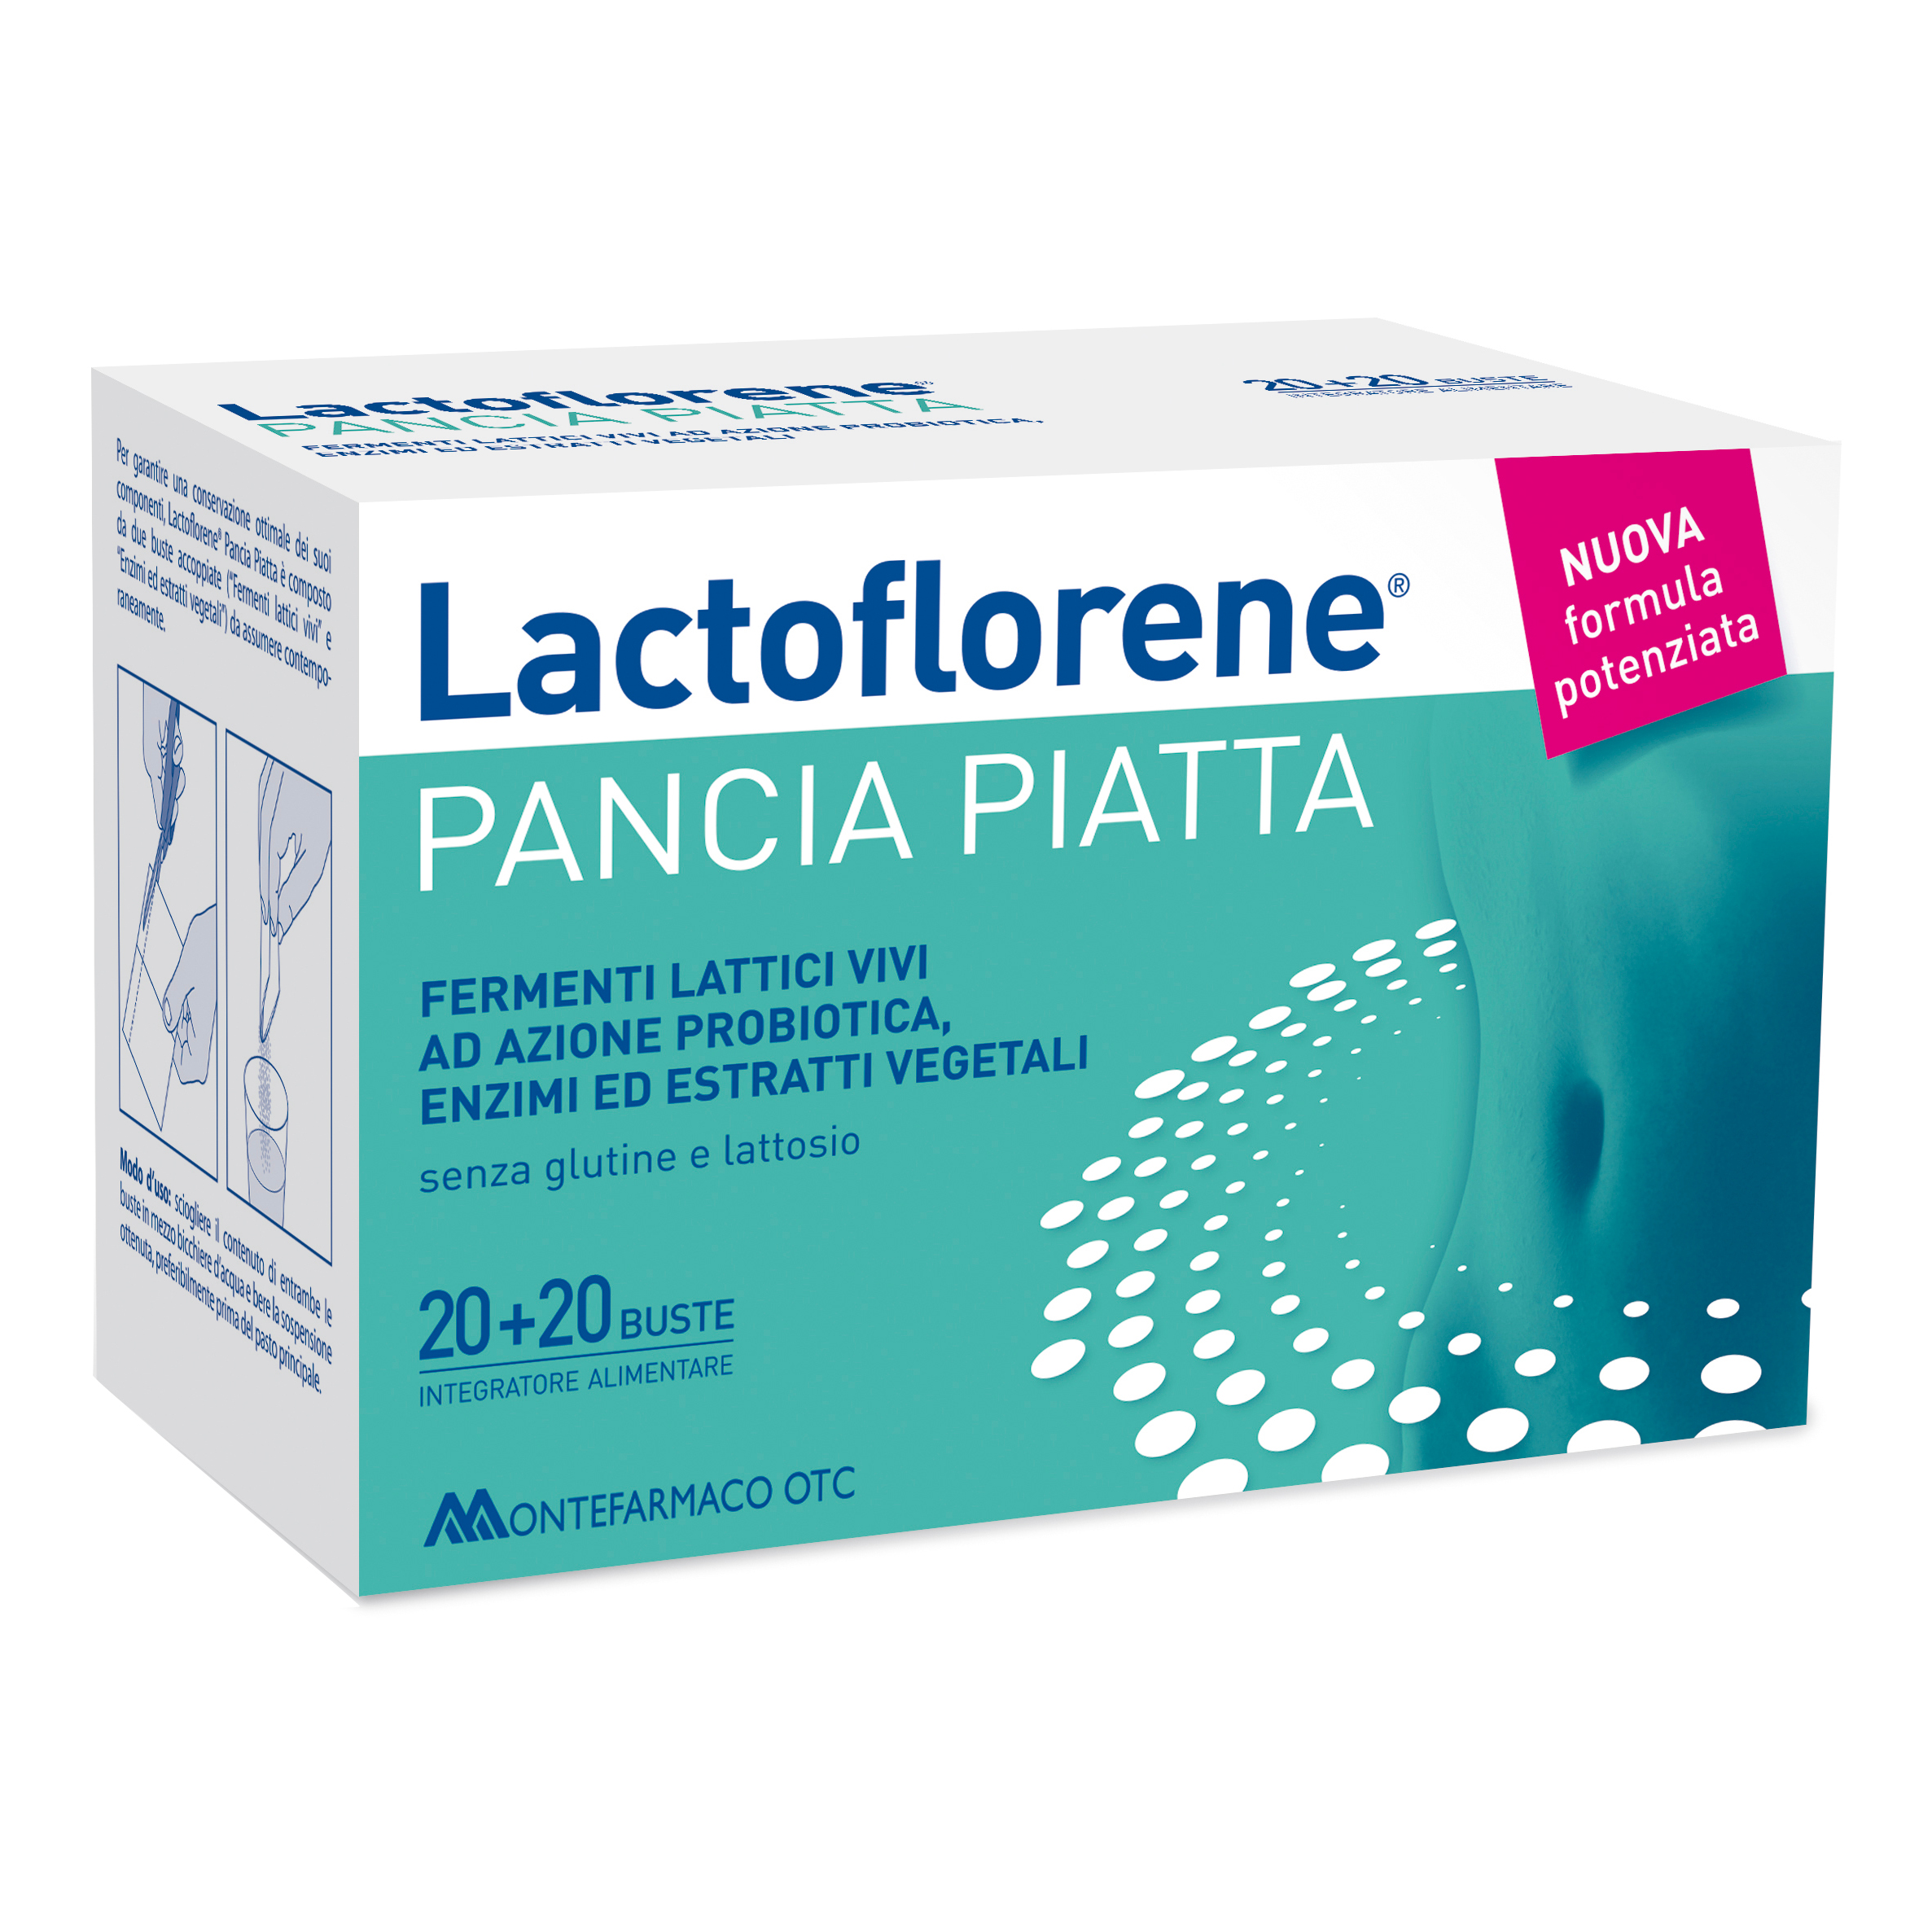 Lactoflorene Pancia Piatta20bs